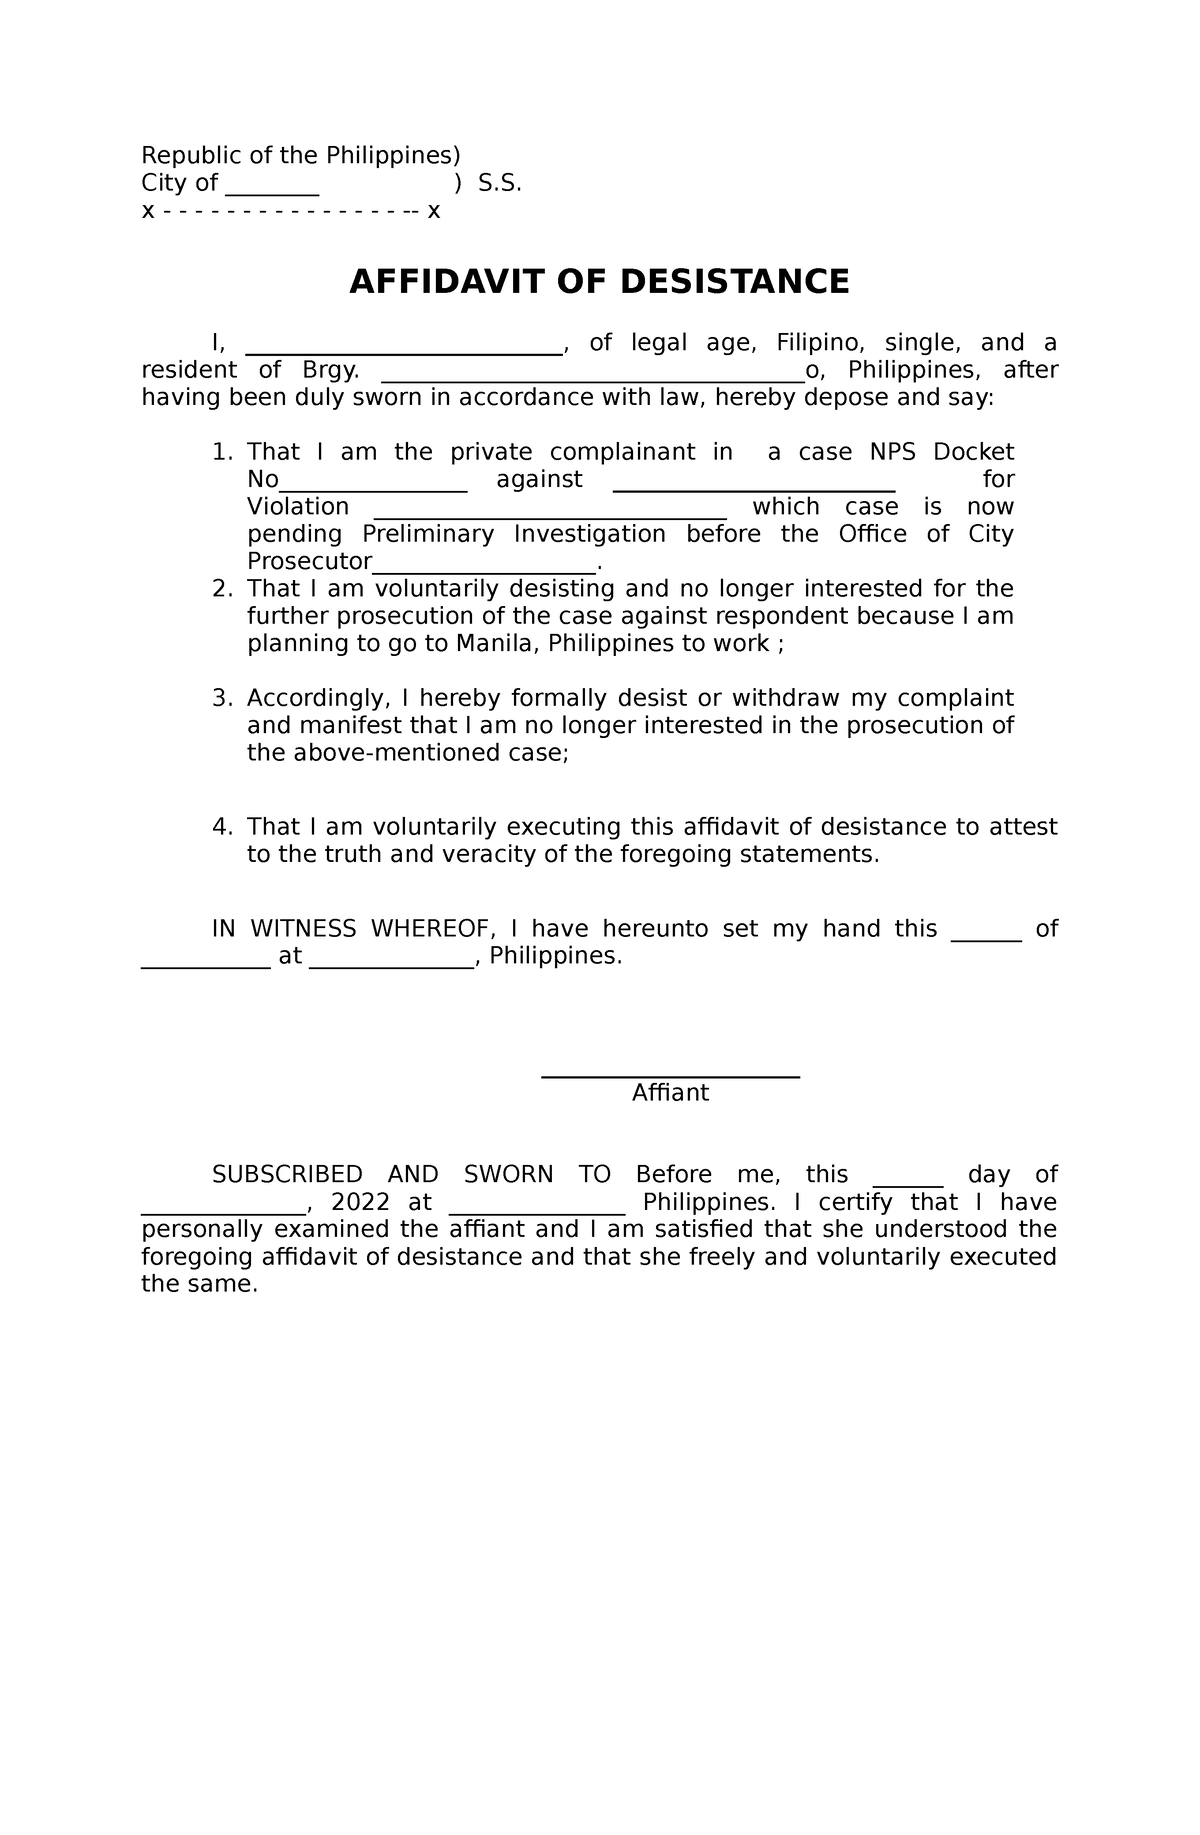 Affidavit Of Desistance Sample Republic Of The Philippines City Of S X X 4025